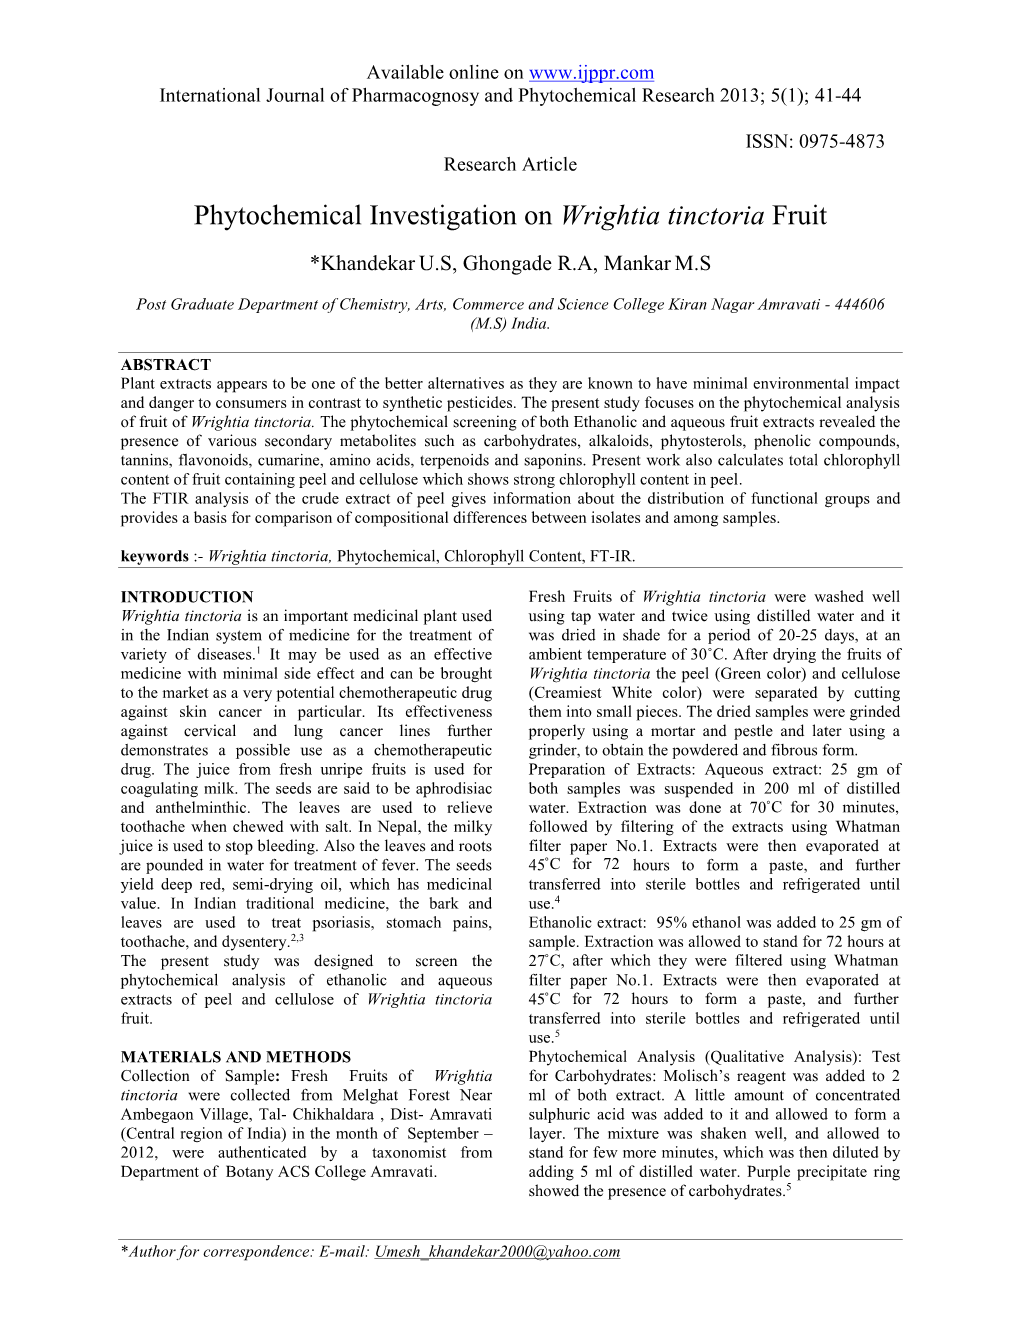 Phytochemical Investigation on Wrightia Tinctoria Fruit